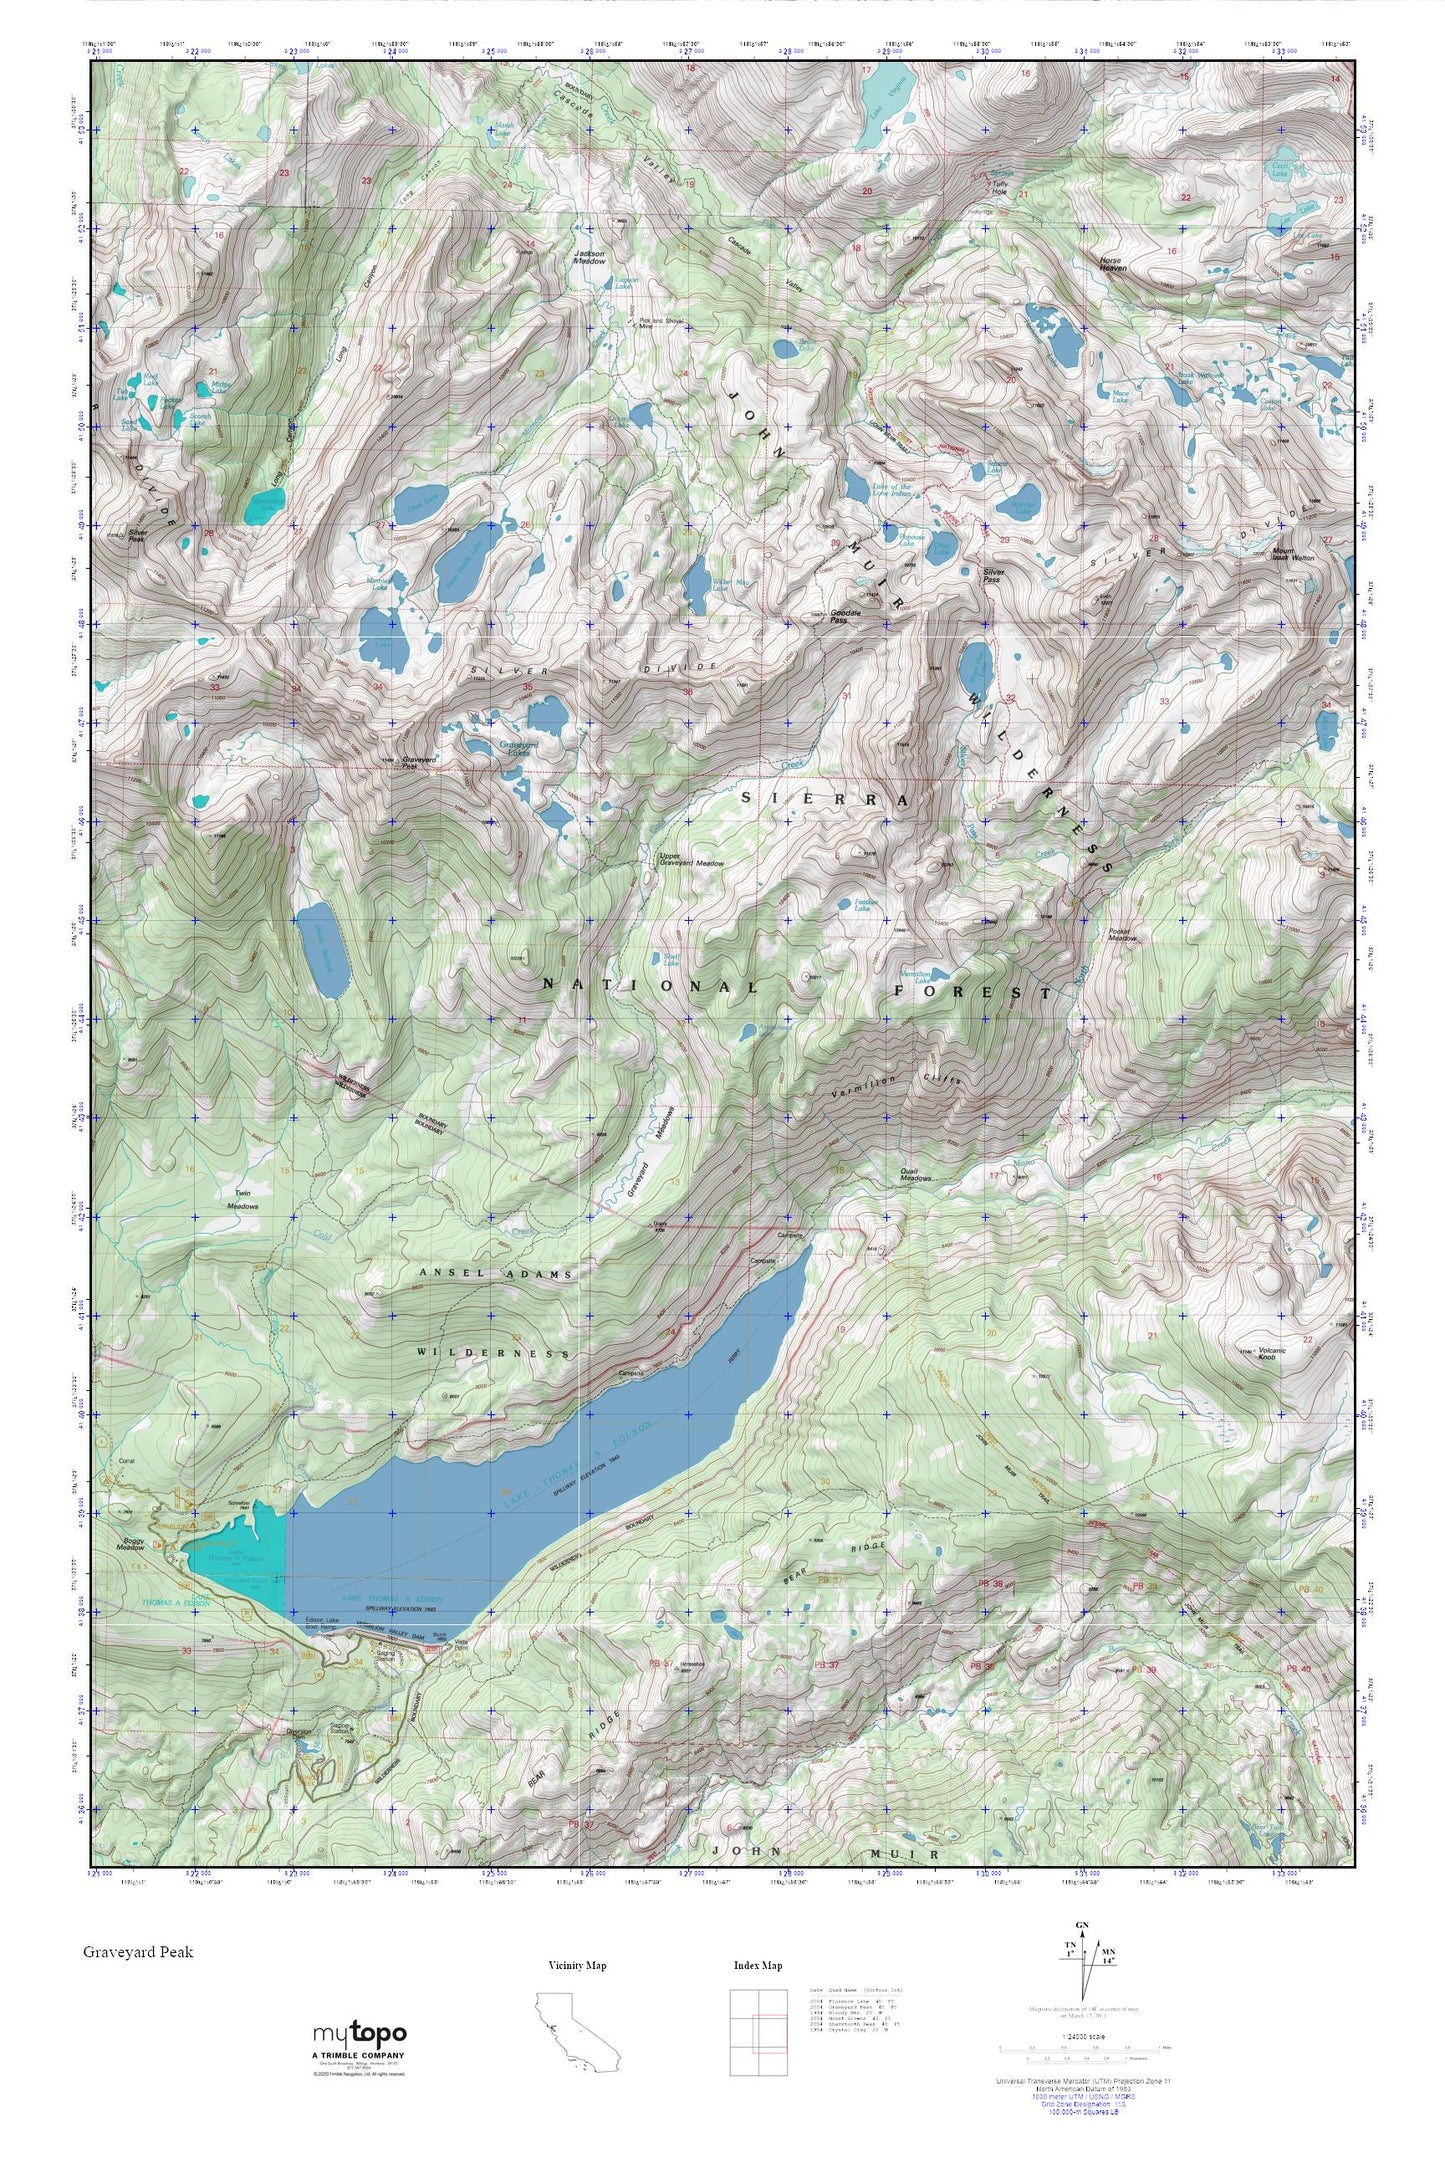 Graveyard Peak MyTopo Explorer Series Map Image